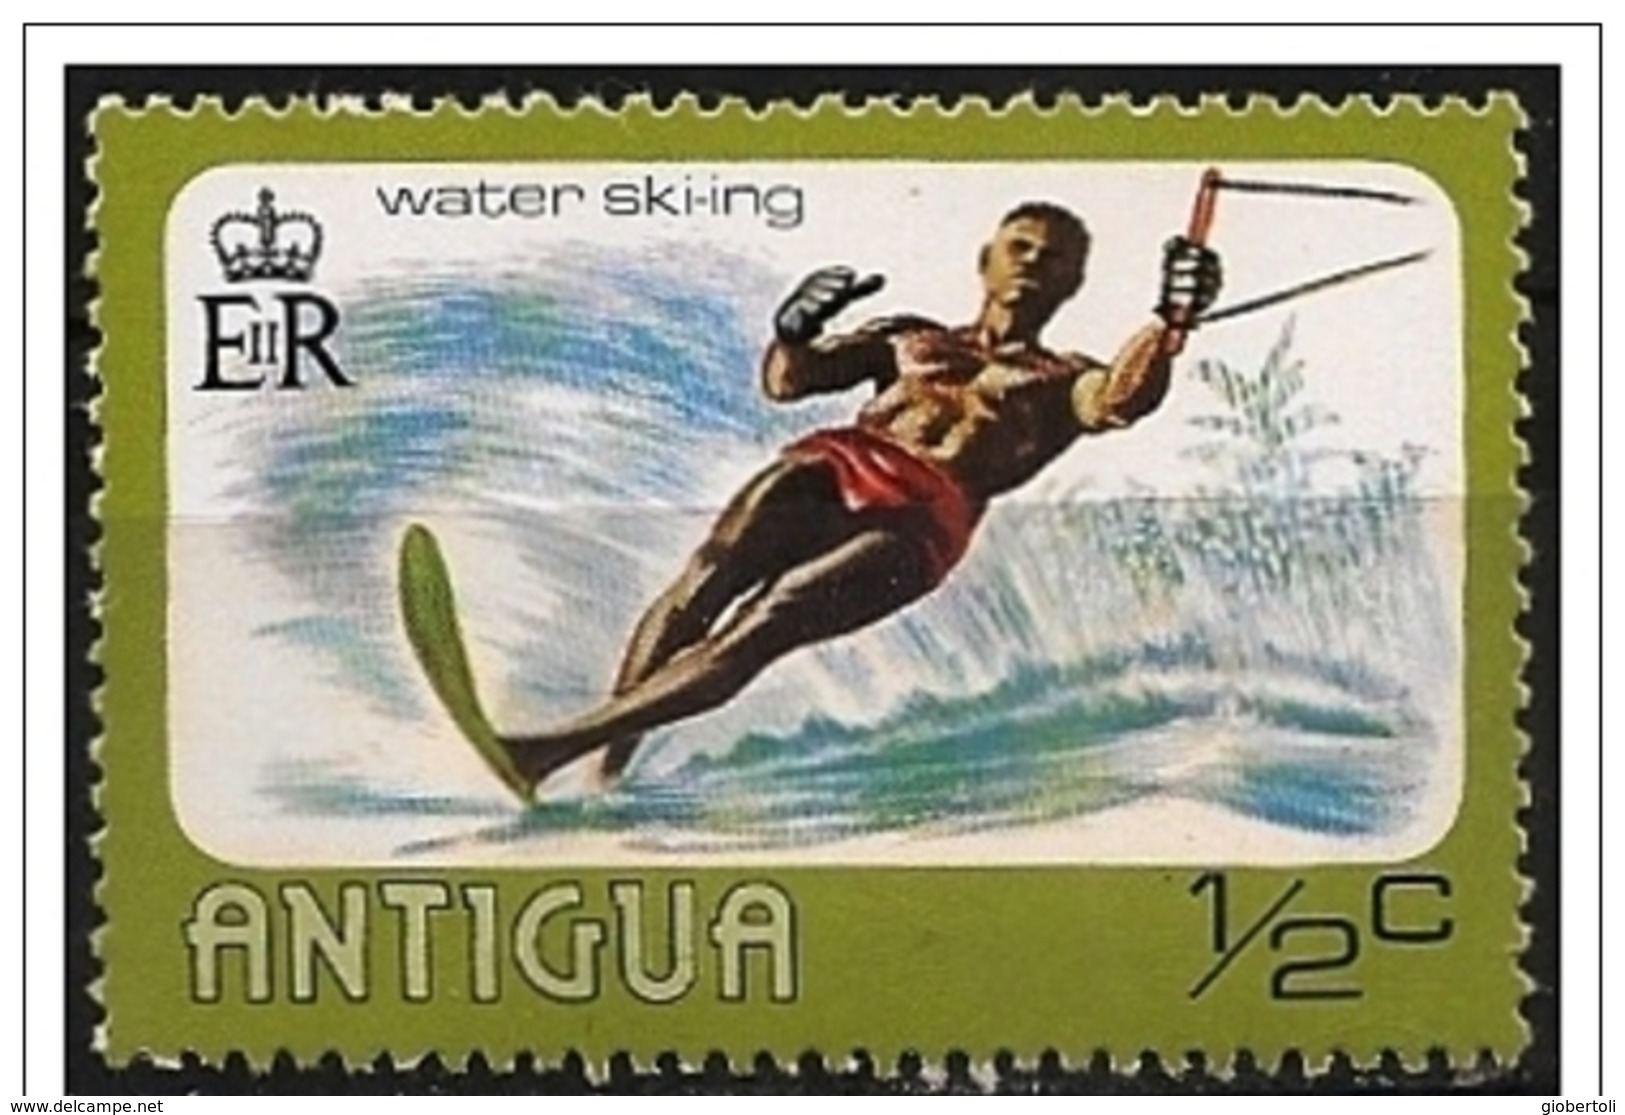 Antigua: Sci Nautico, Water Skiing, Ski Nautique - Wasserski